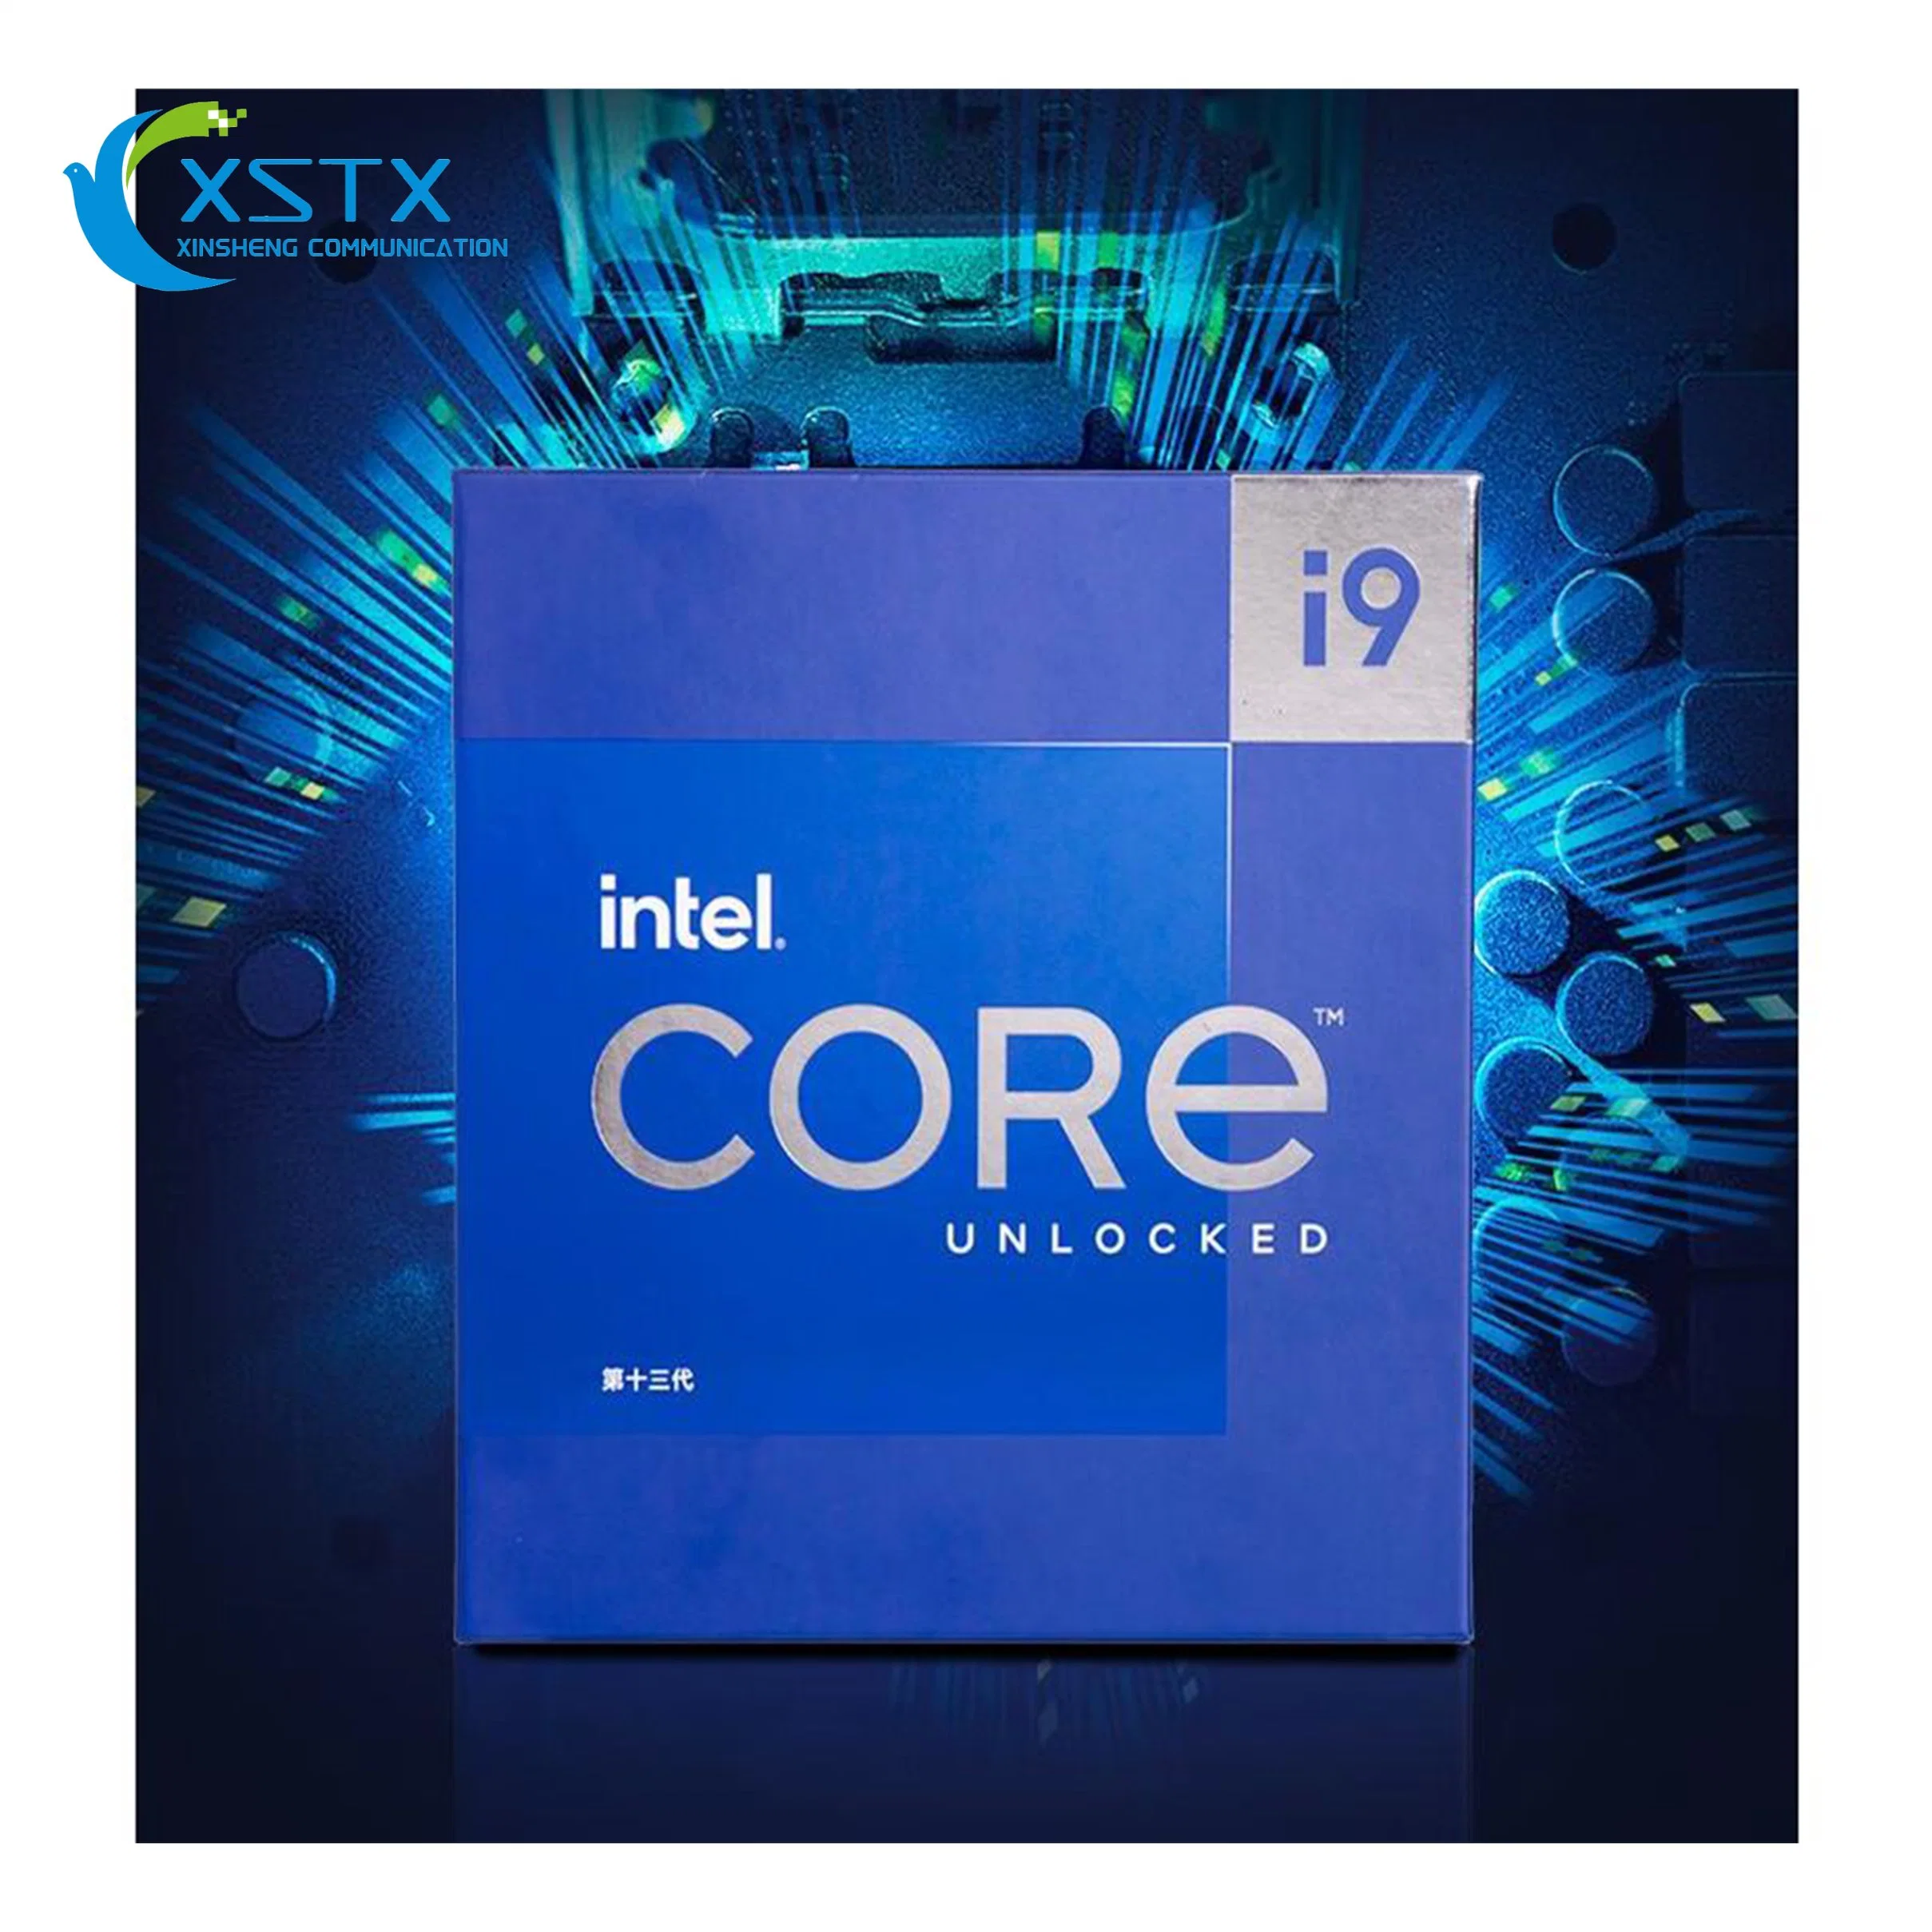 Intel Core i9 9900ks Computer CPU 8 Core LGA 1151